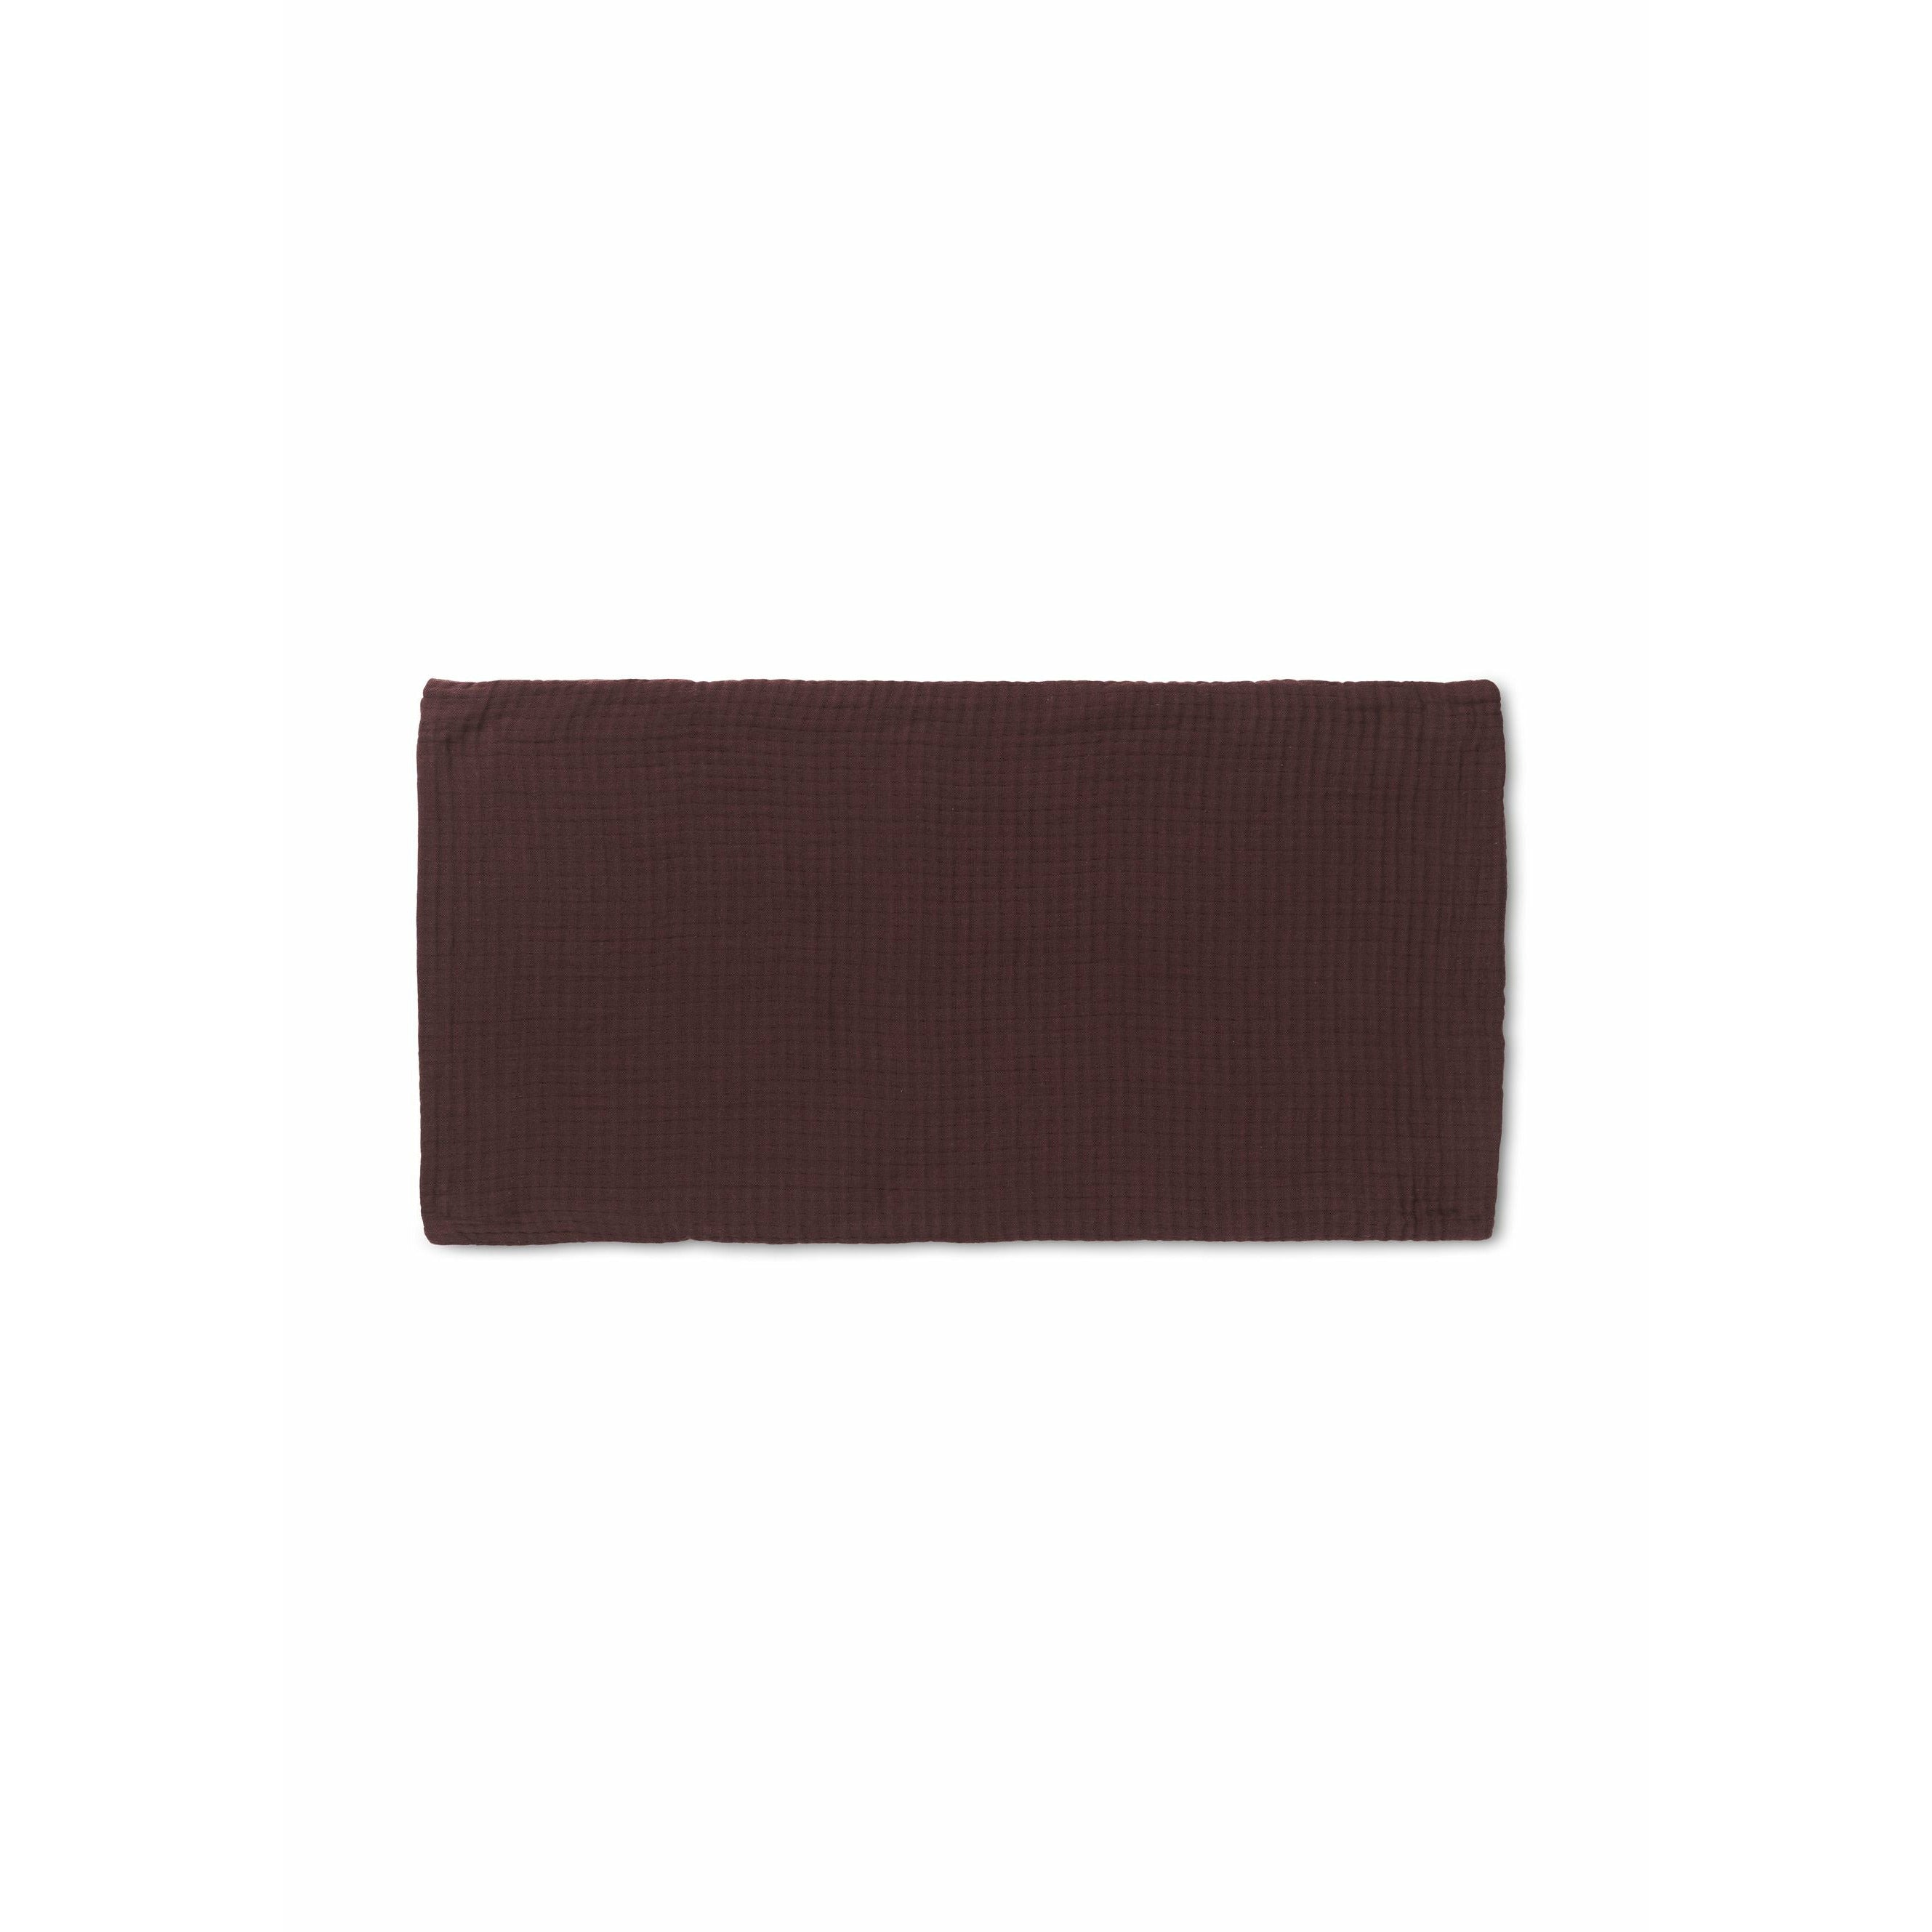 Juna View Cushion 30x60 Cm, Chocolate